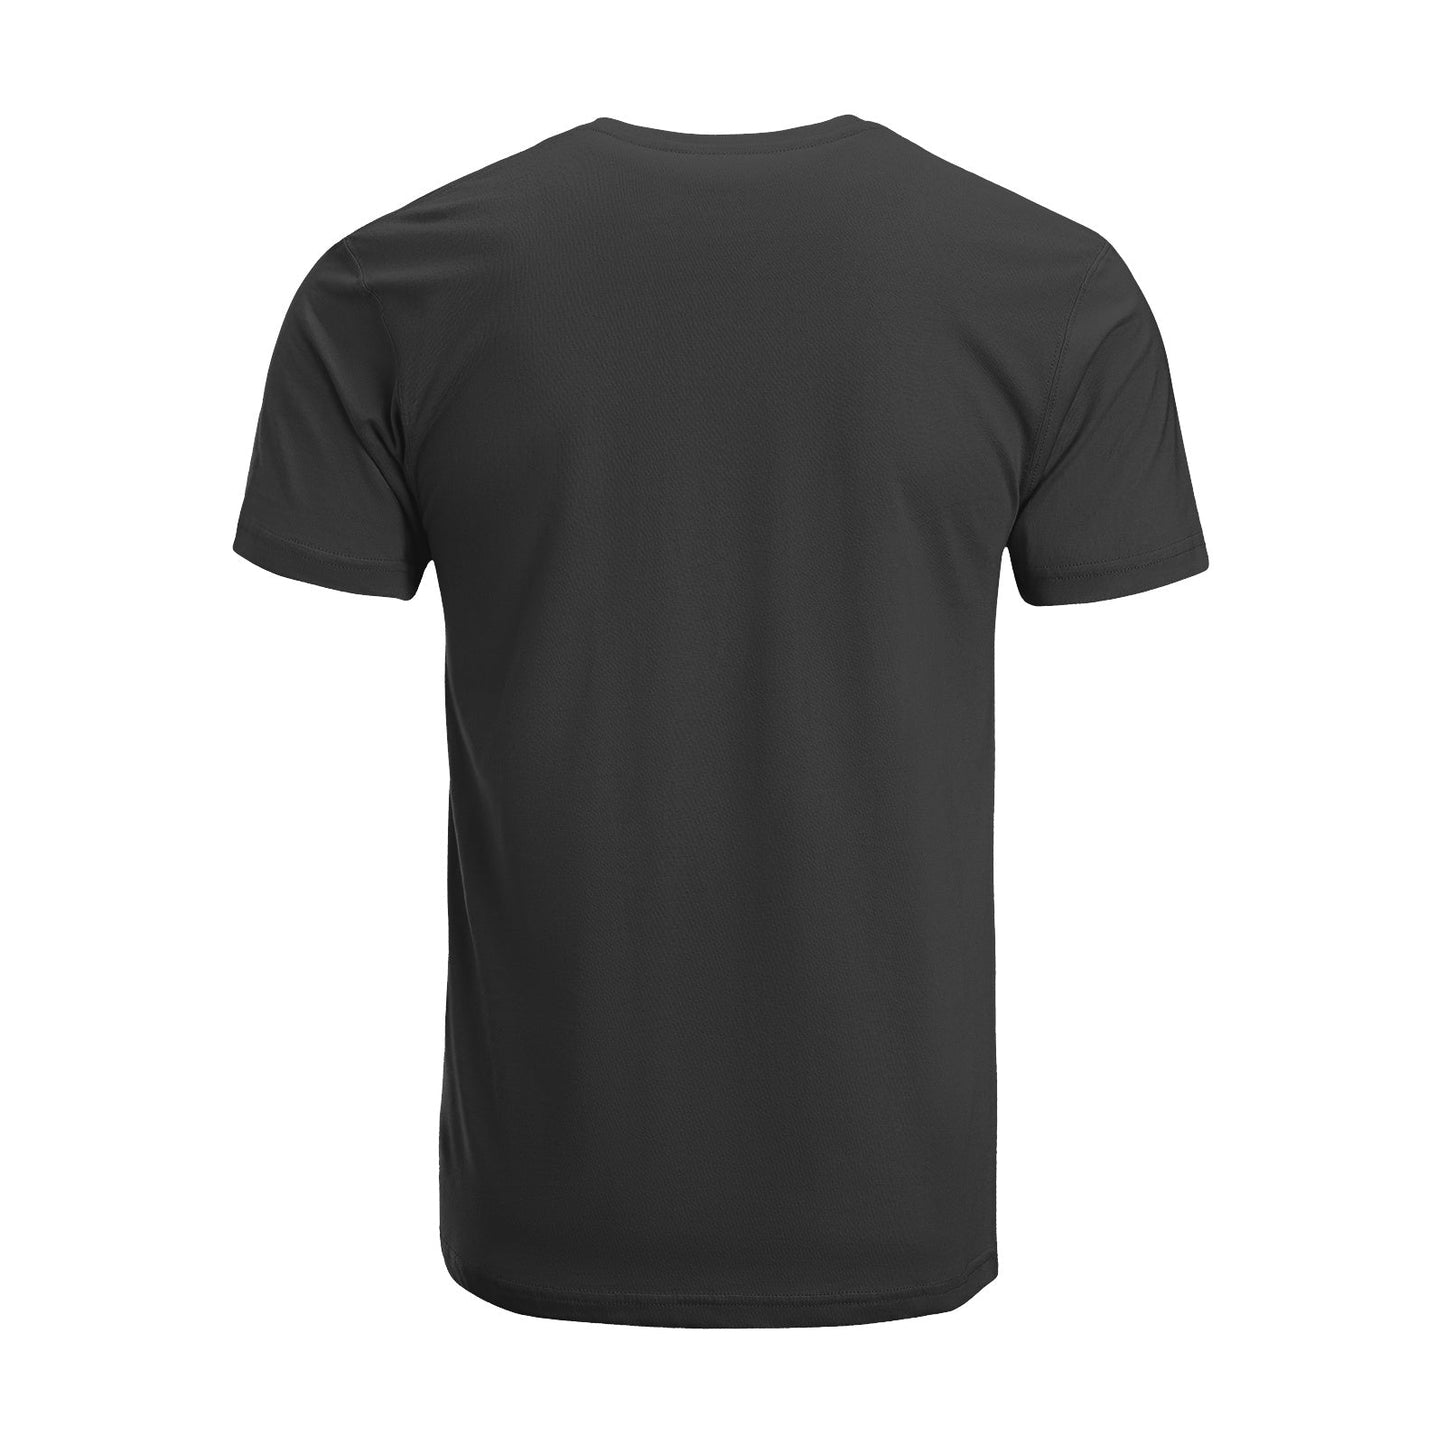 Unisex Short Sleeve Crew Neck Cotton Jersey T-Shirt CAT 37 - Tara-Outfits.com